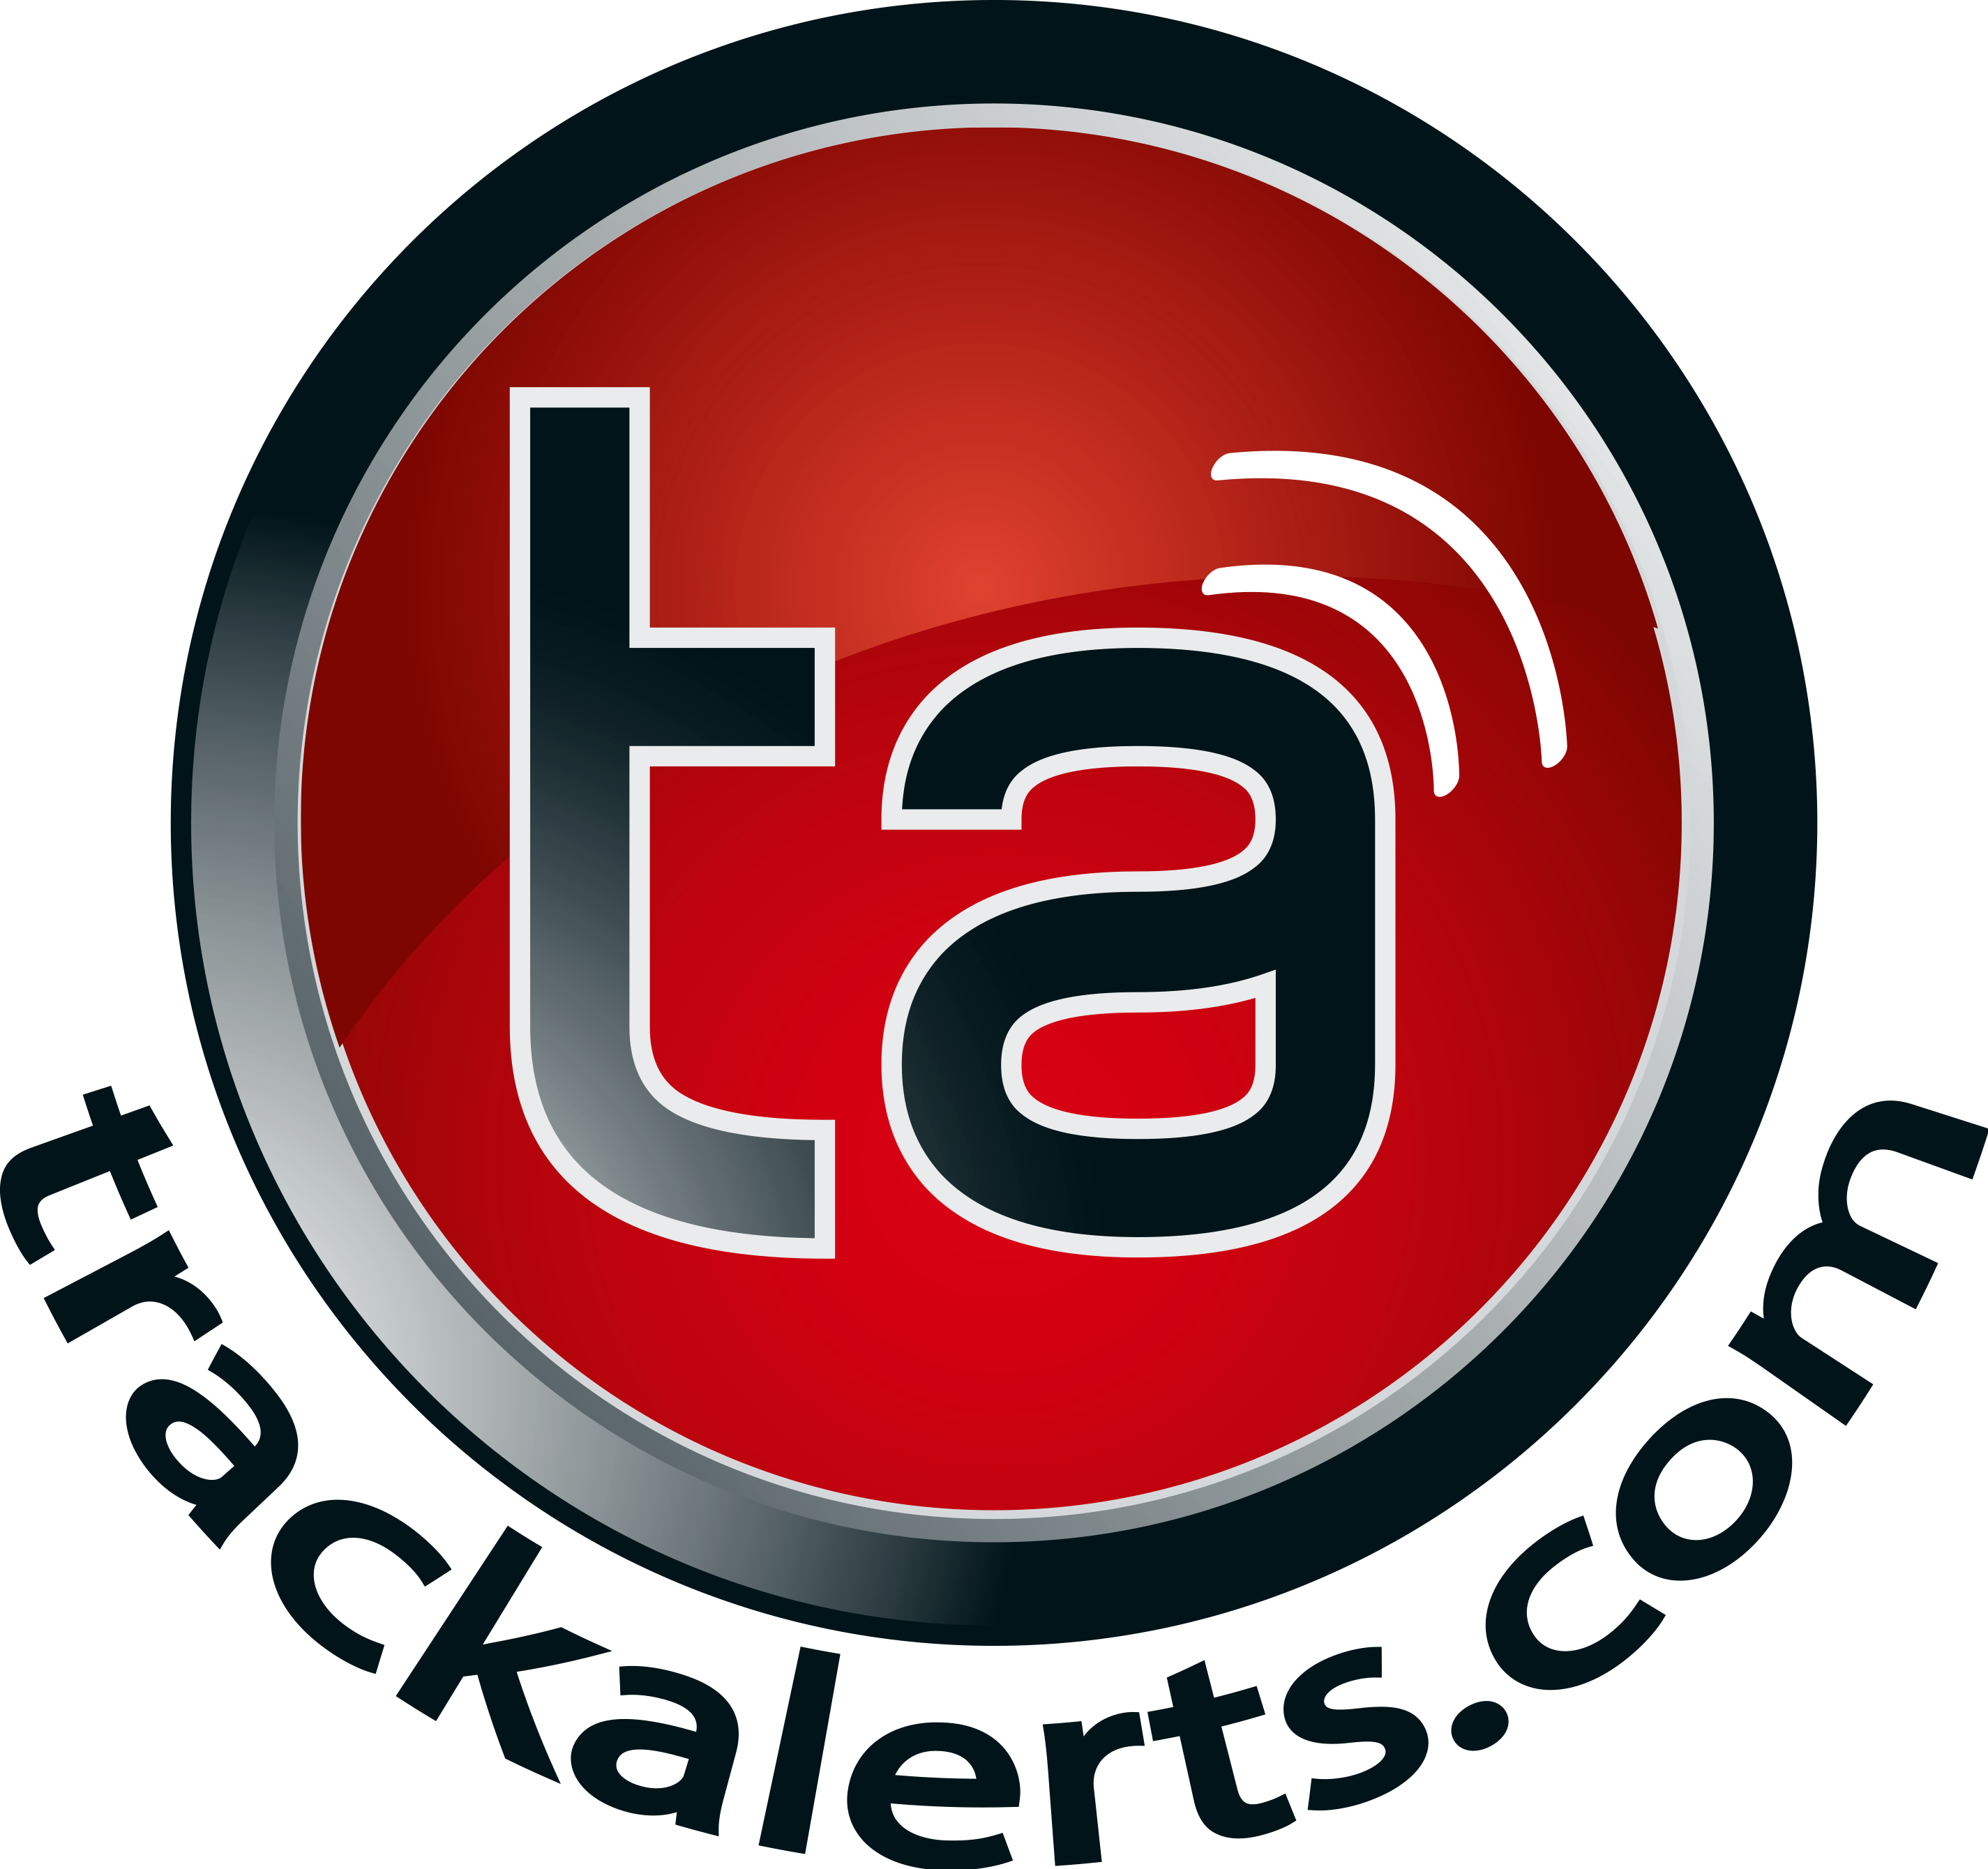 Trackalerts.com, track and field news website